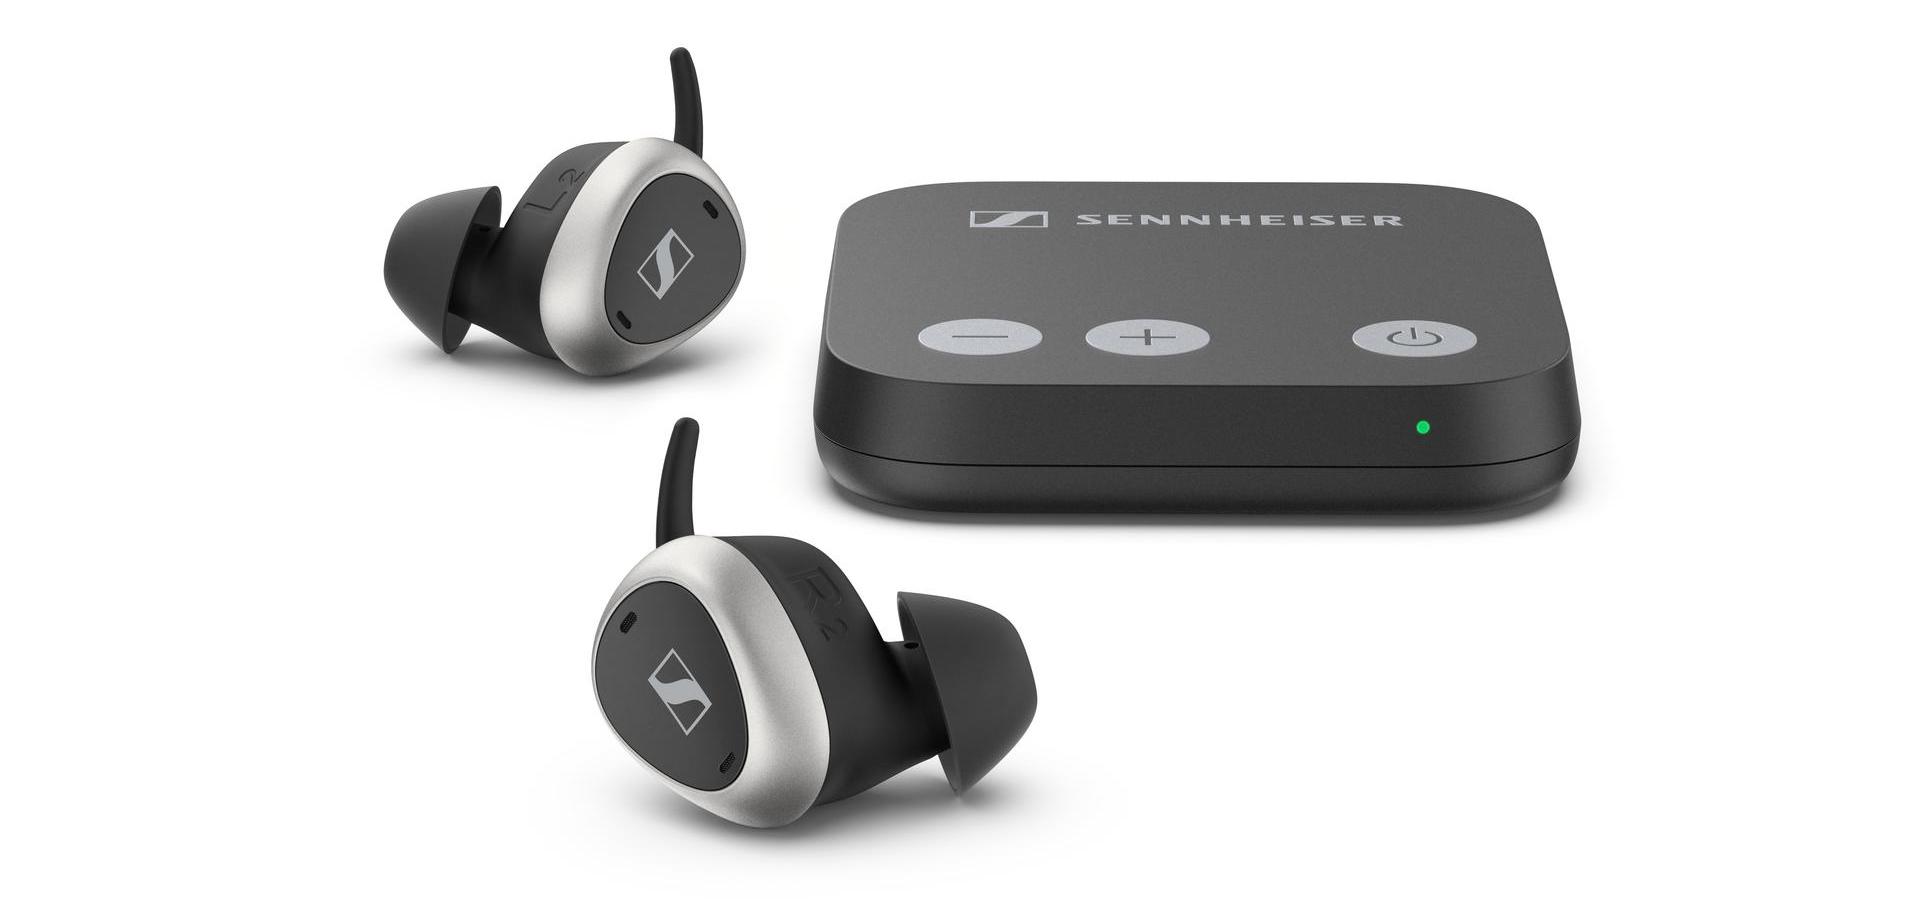 The Sennheiser TVS 200 true wireless earbuds and transmitter for dialogue enhancement of TV programming